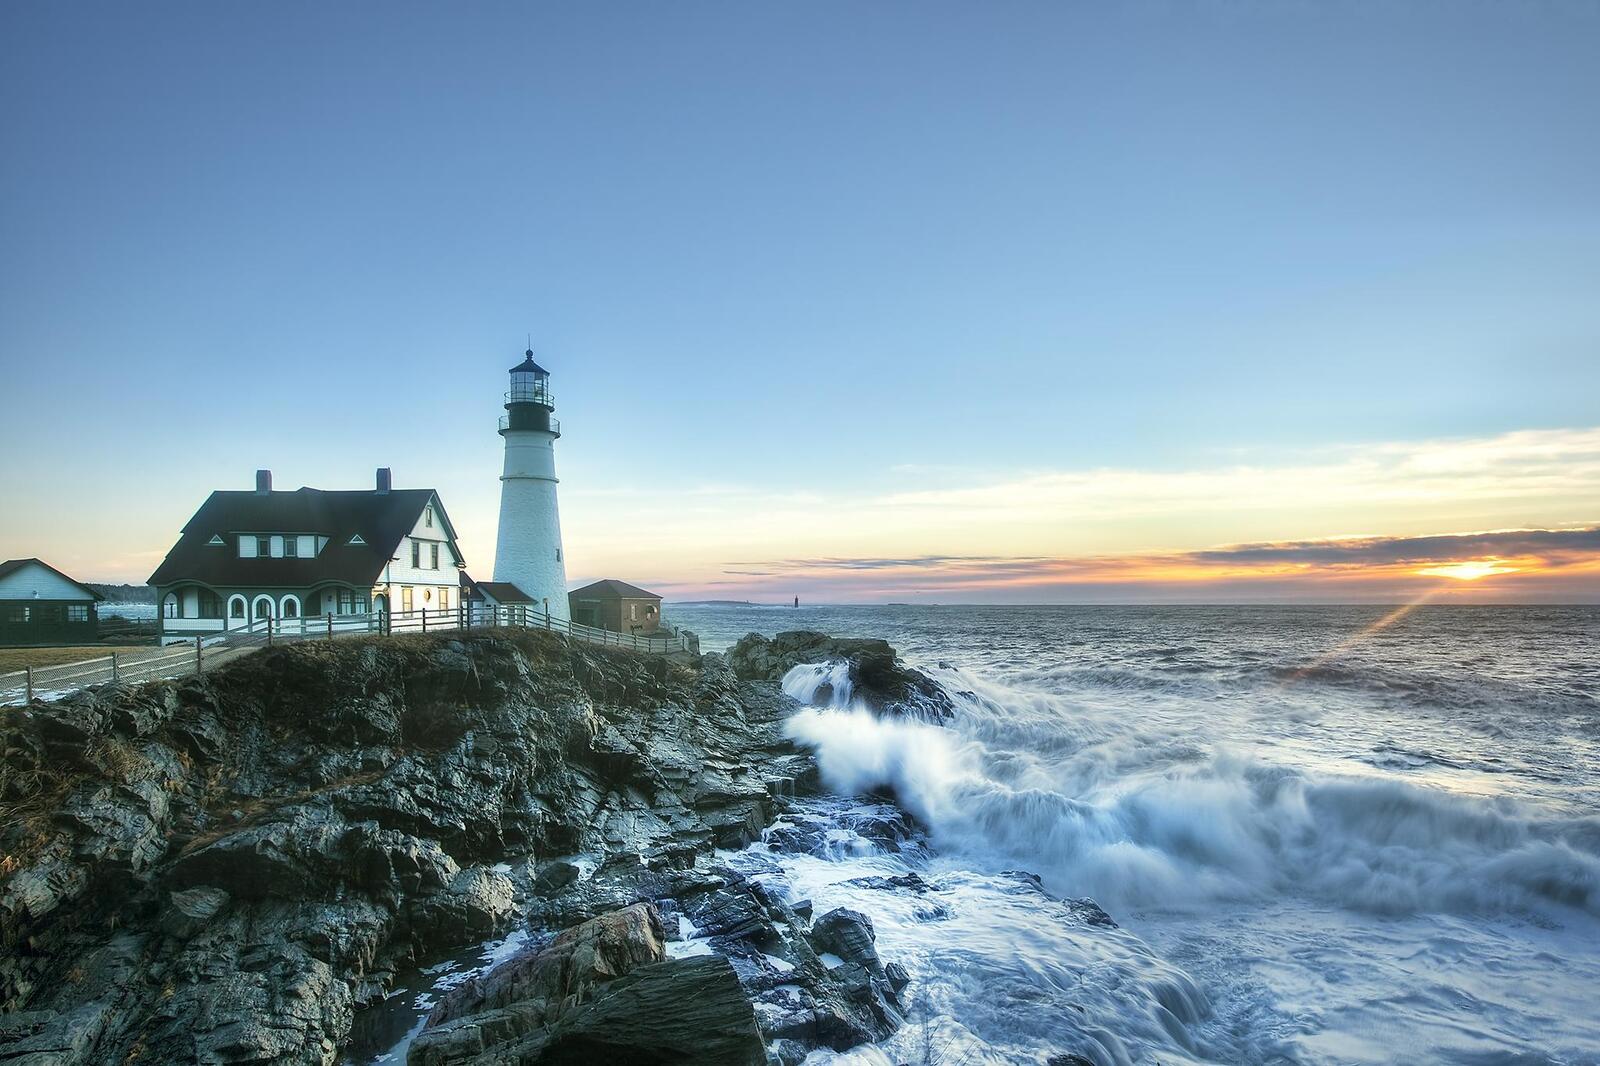 Wallpapers Cape Elizabeth rocks The Bay of Maine on the desktop